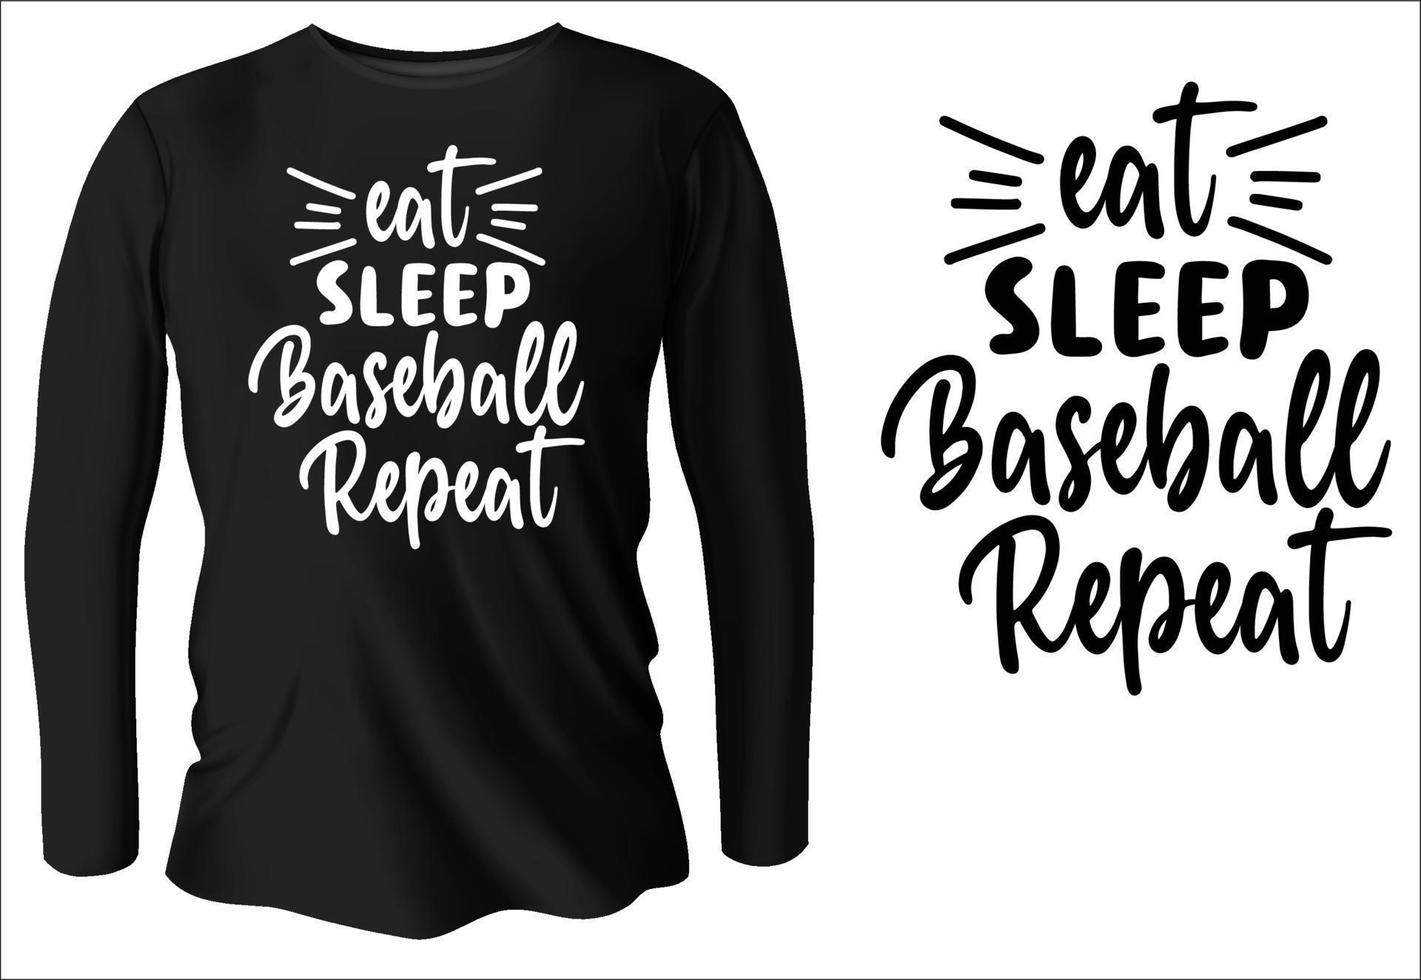 eat sleep baseball repeat typography t-shirt design with vector